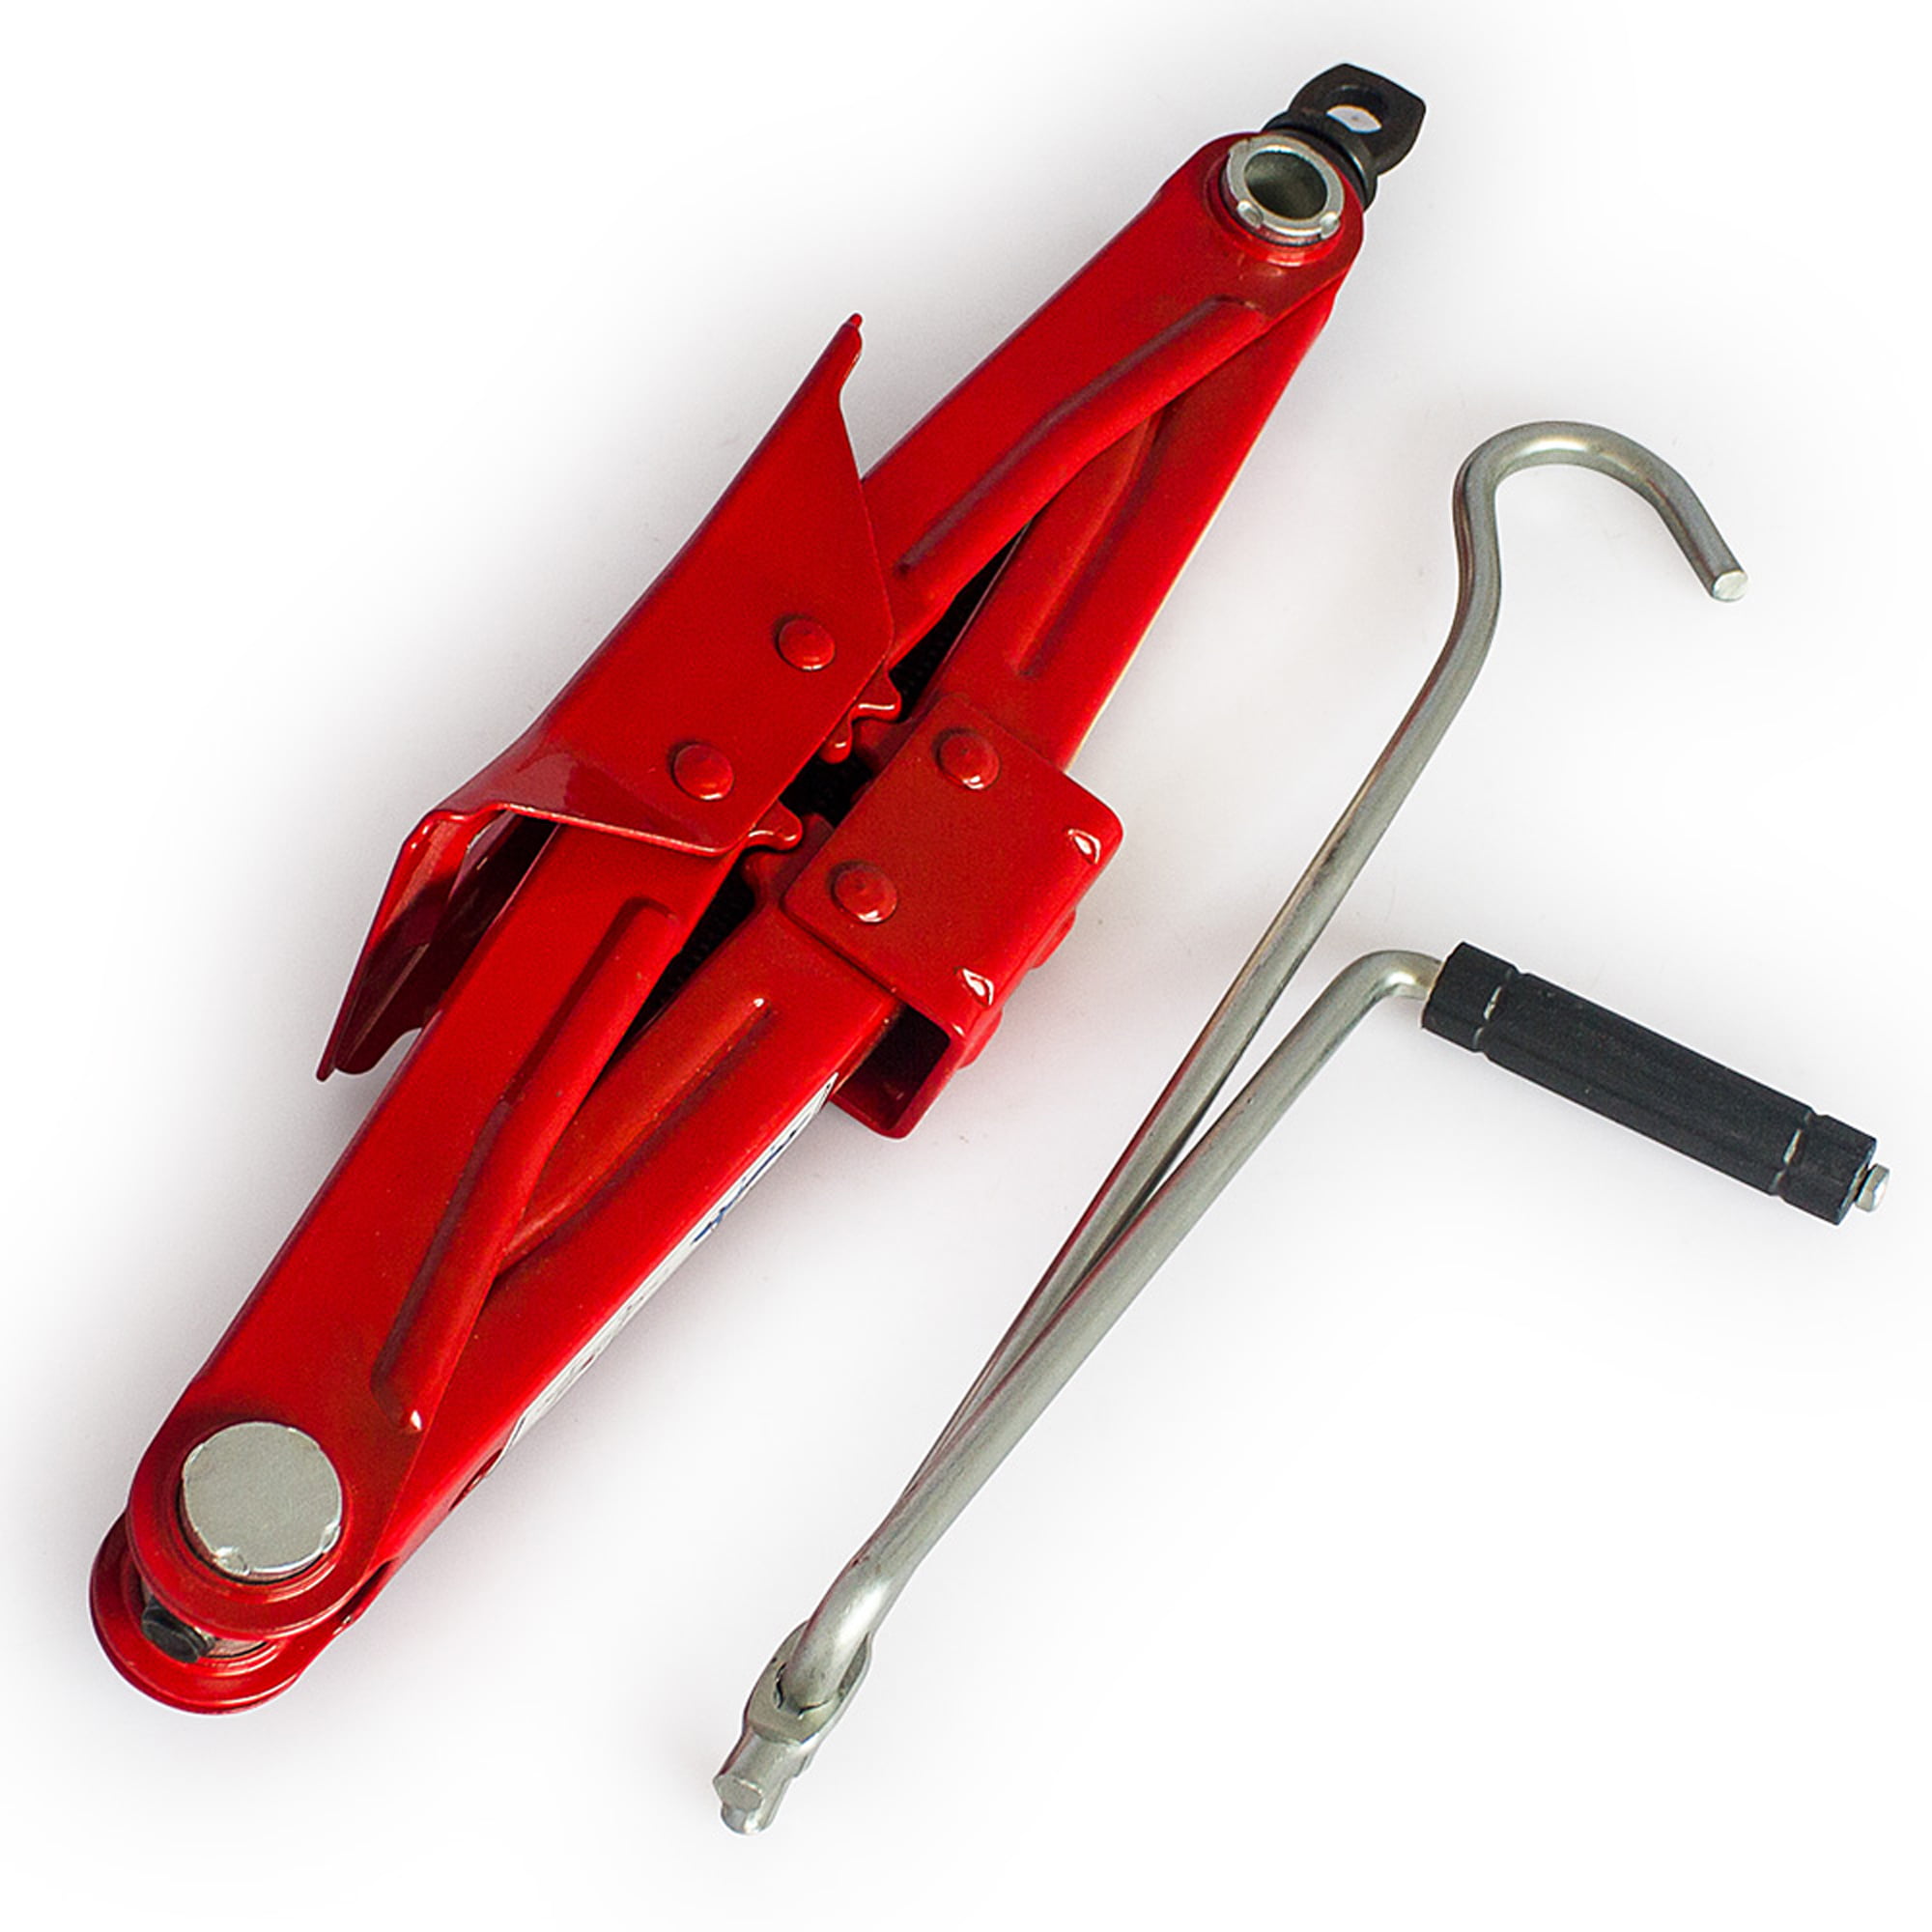 New 1 Ton Tonne Scissor Jack Lift Wind Up For Car Van Garage Home Emergency Tool